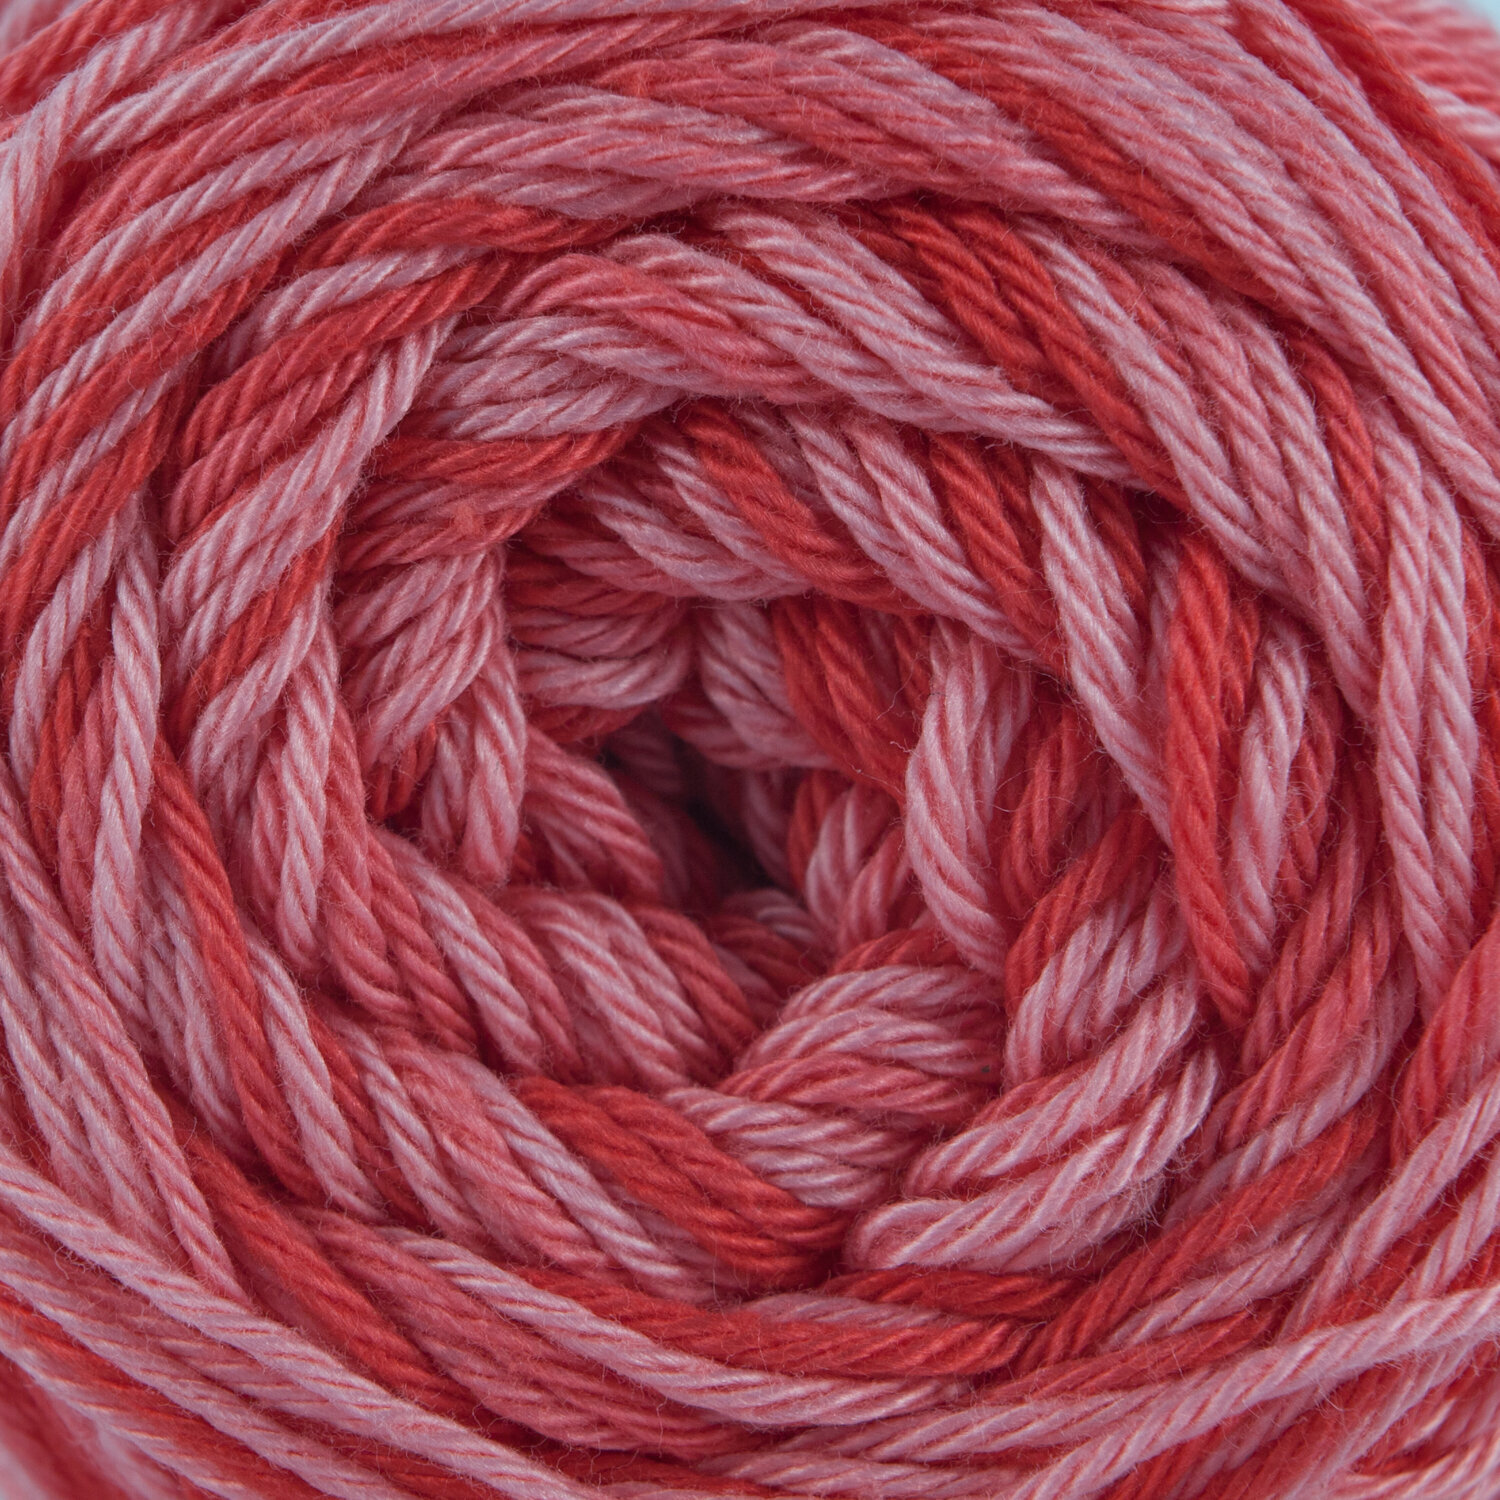 Knitting Yarn Nitarna Ceska Trebova Katka Ombre 33272 Red-Pink